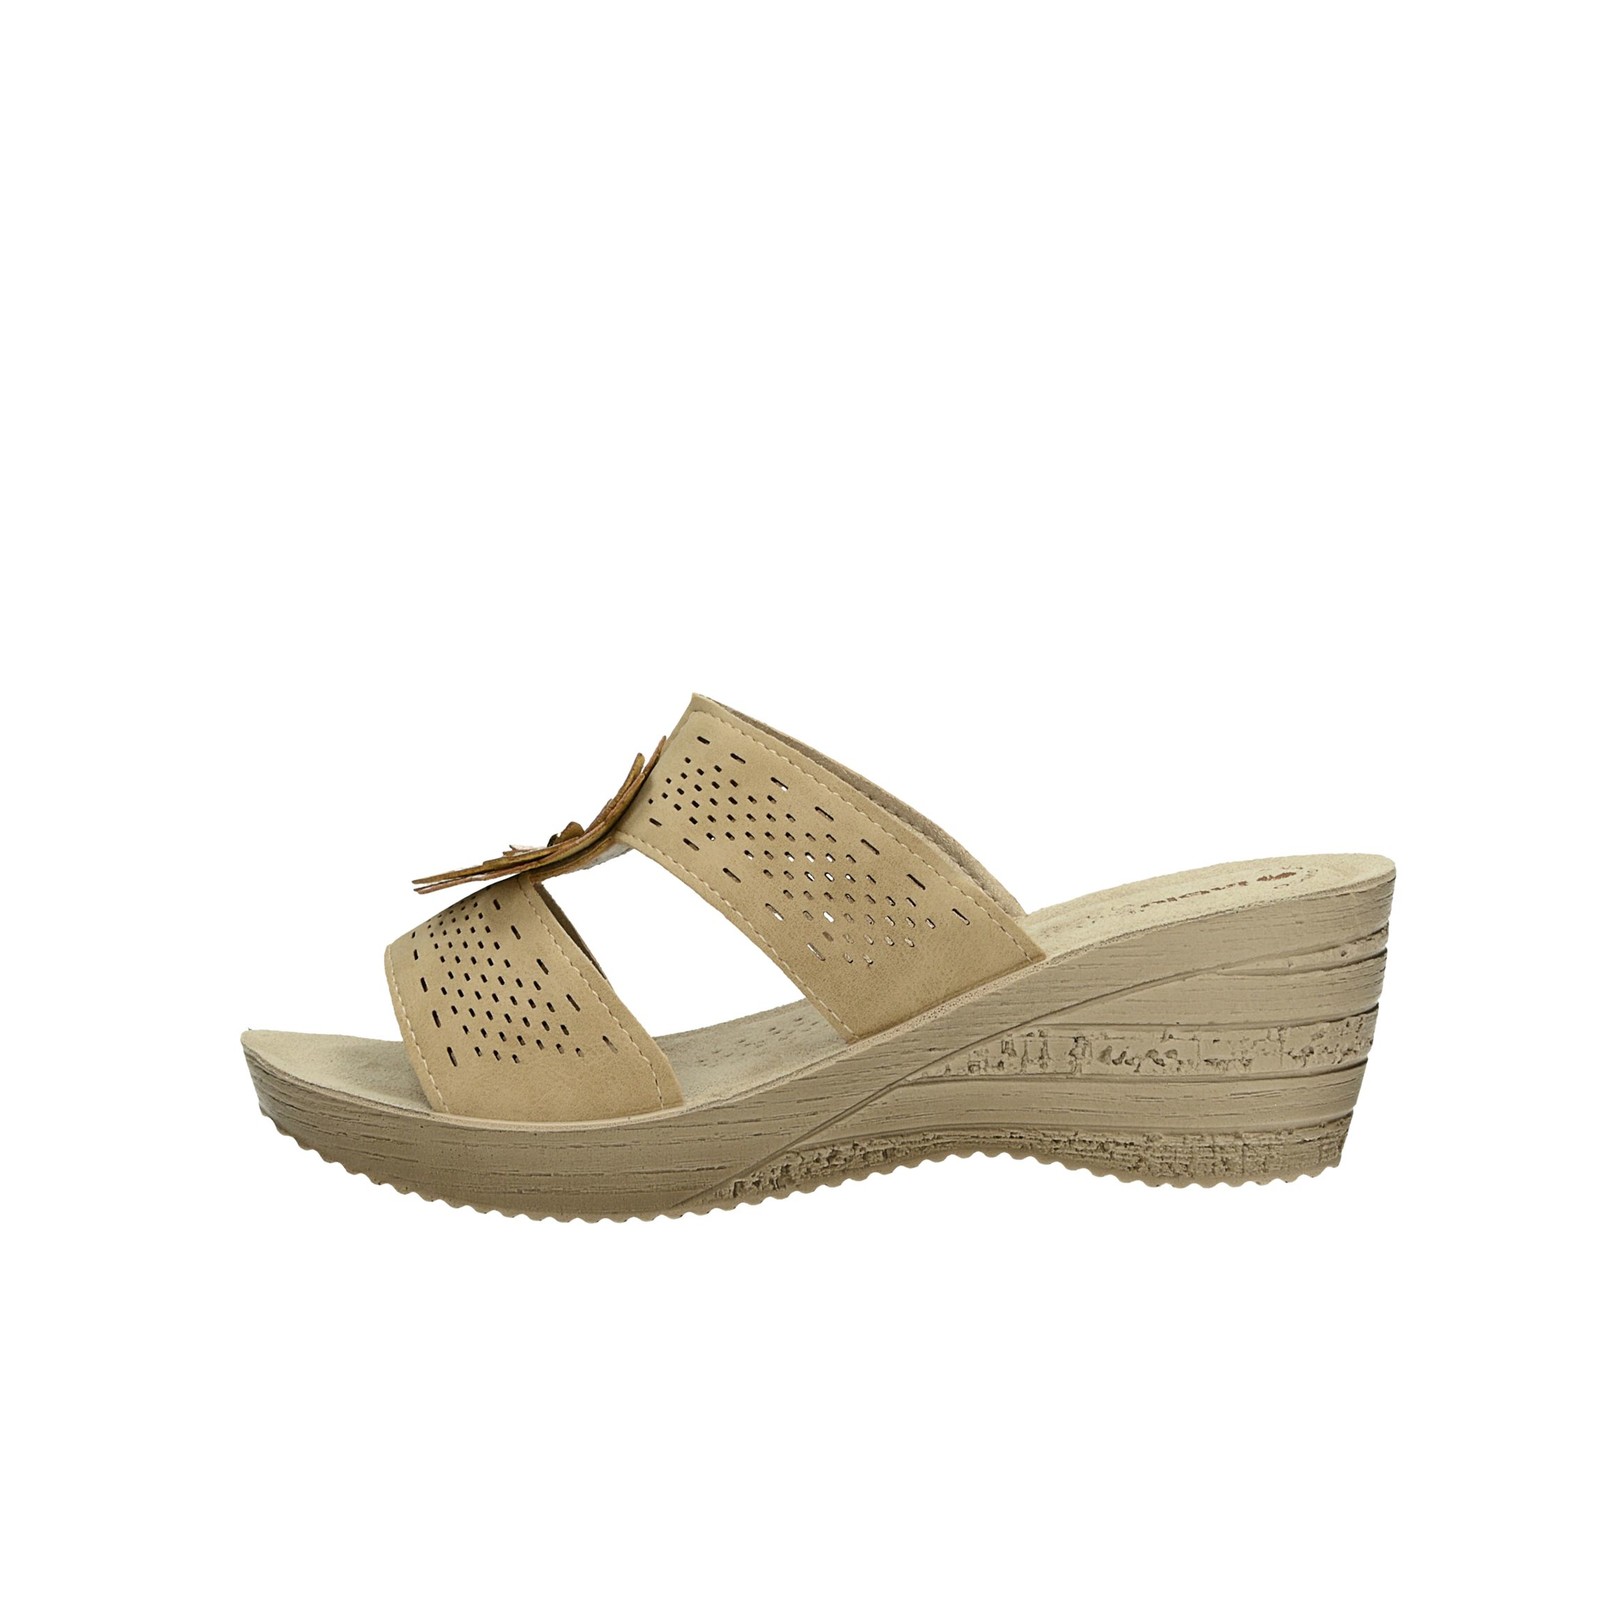 Inblu Women Sandal #MR06 - COPPER – The Condor Trendz Store